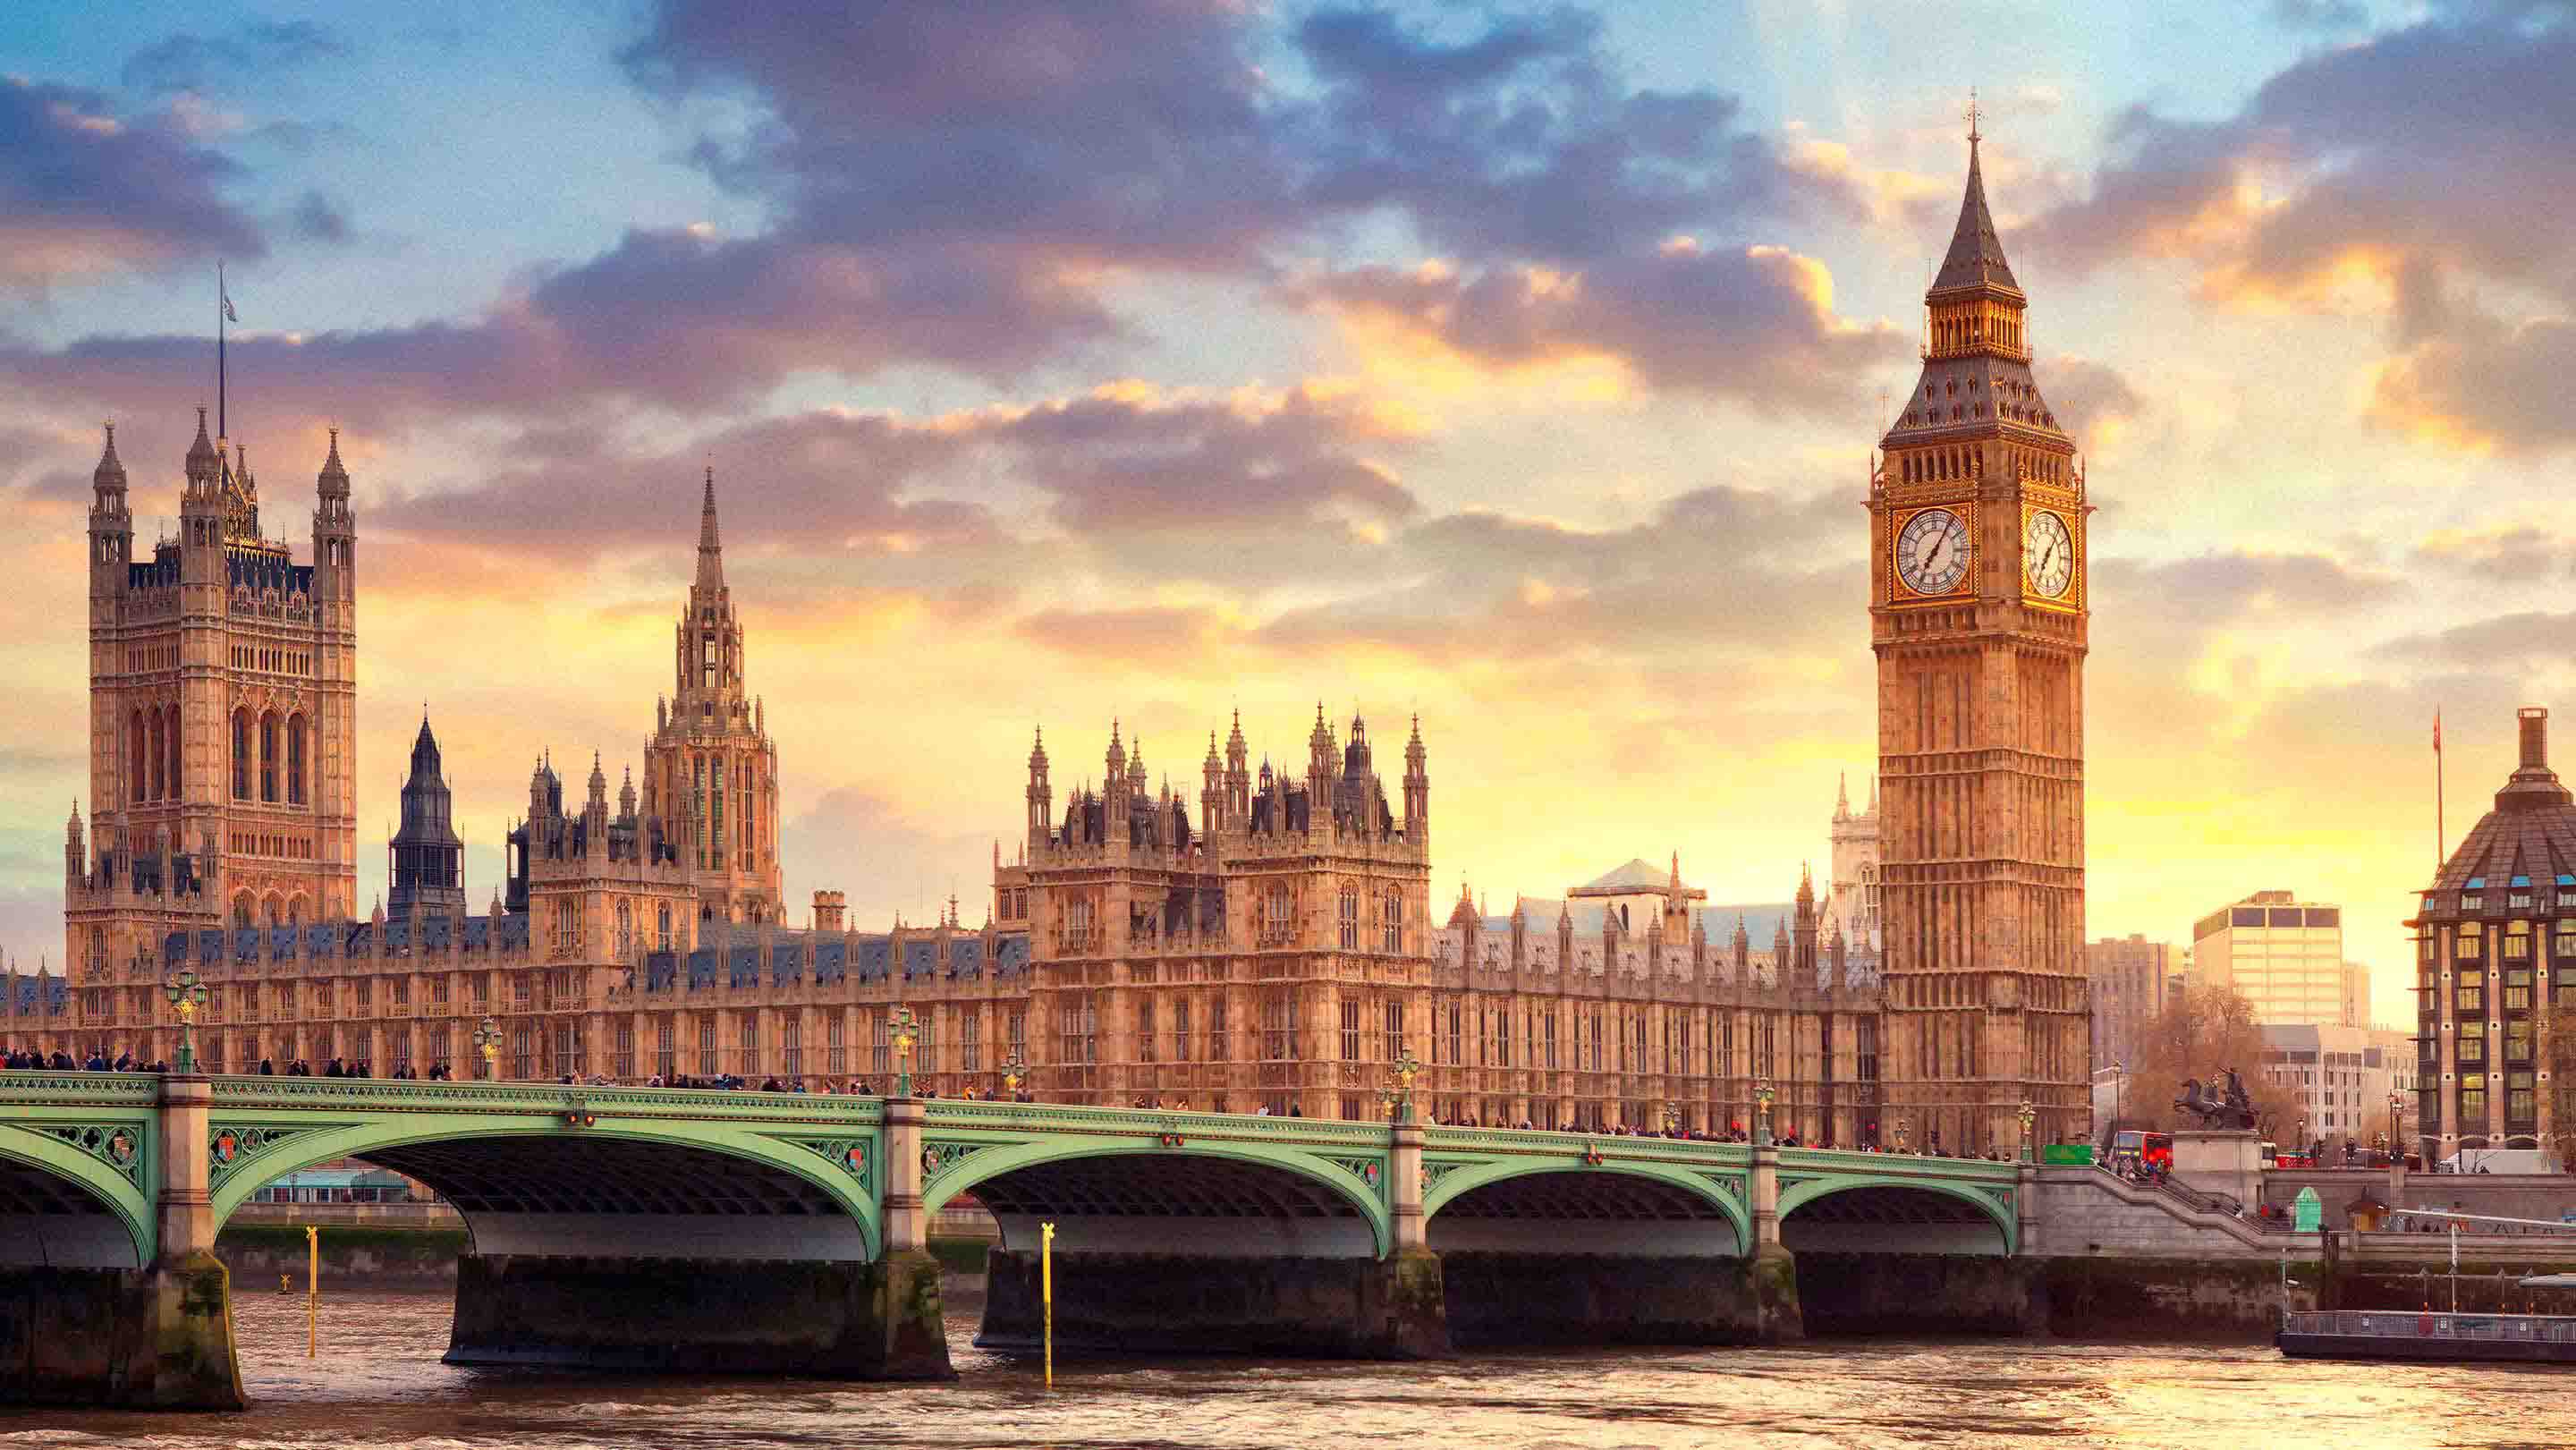 City of London landscape showcasing the Big Ben